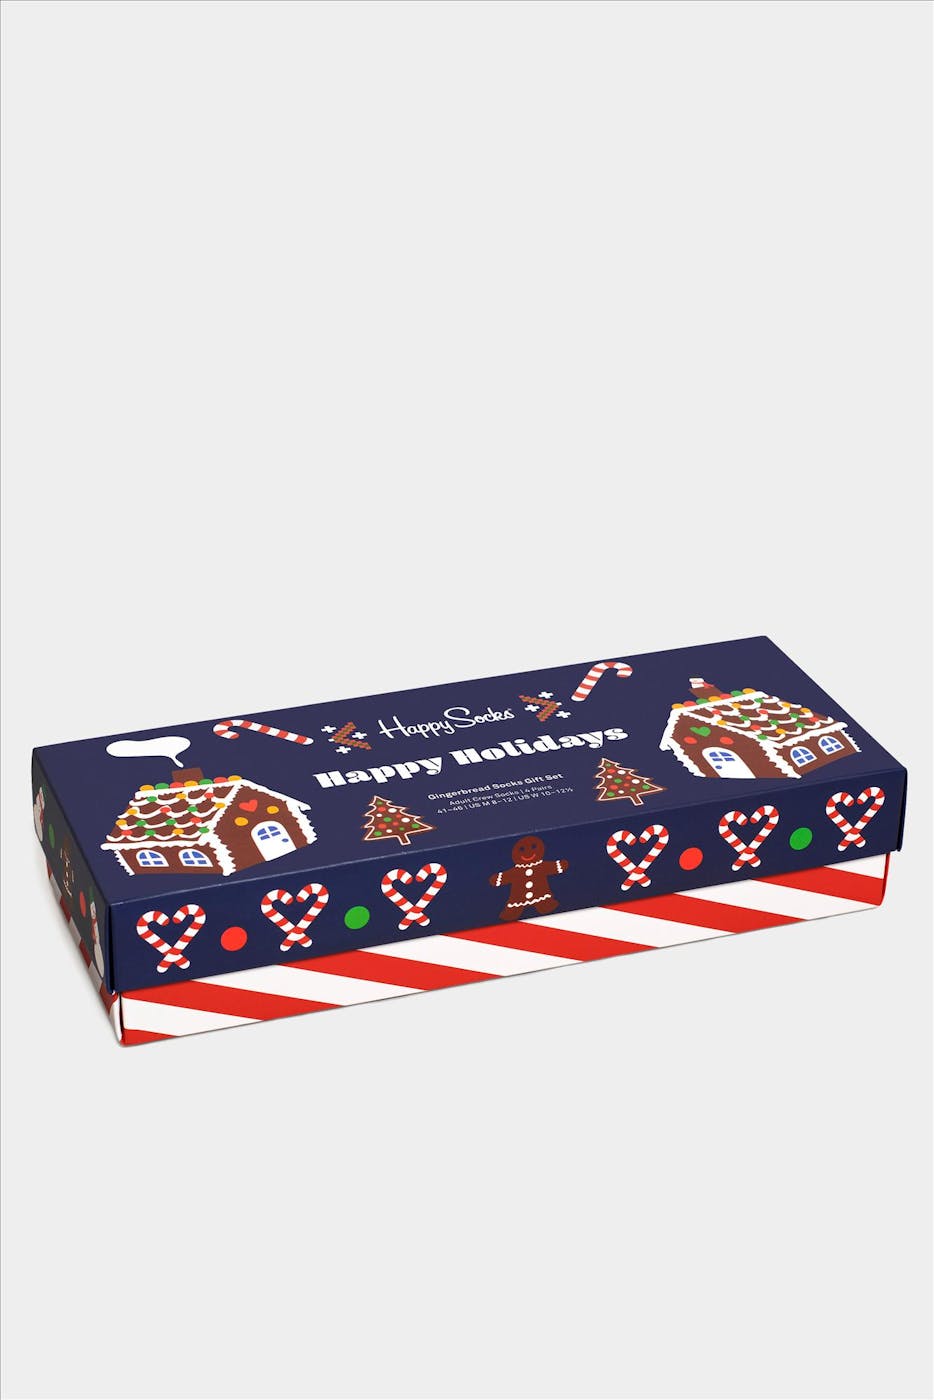 Happy Socks - Donkerblauw-multicolour Gingerbread Cookies 4-pack Gift Box Sokken, maat 36-40